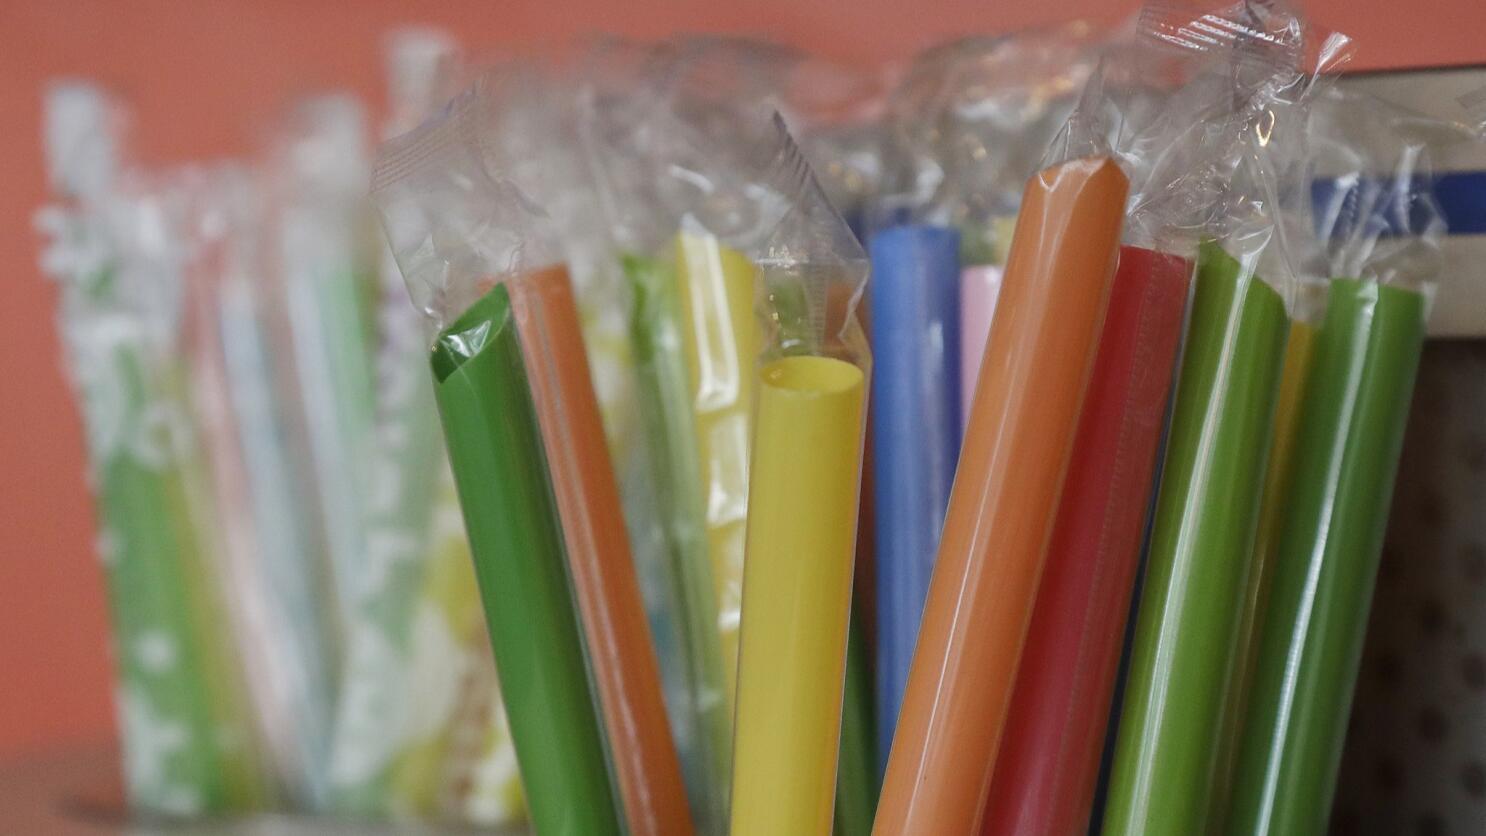 The last straw? Starbucks pledges to eliminate plastic straws